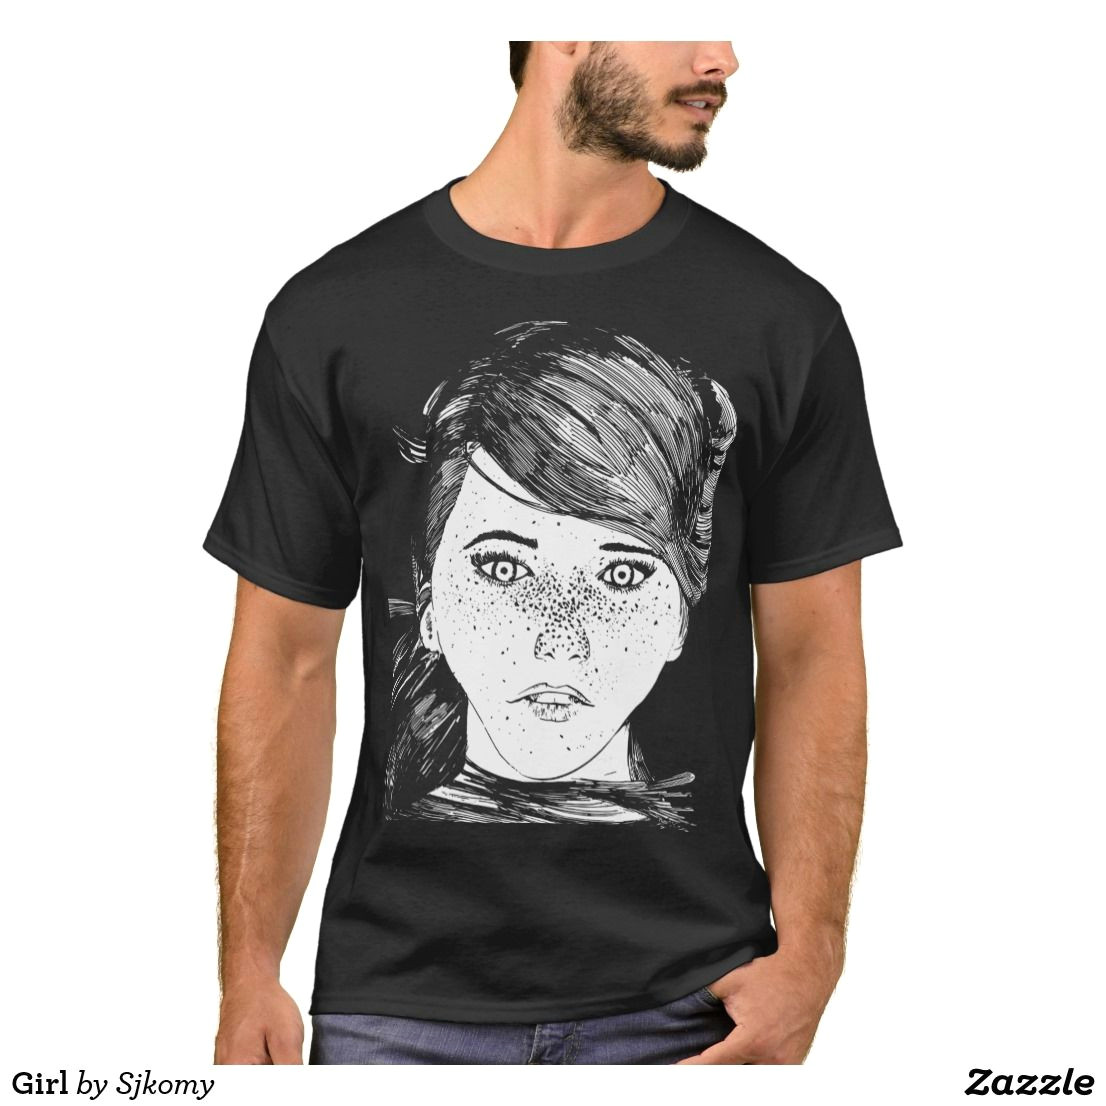 Girl In Shirt Drawing Girl T Shirt Check that Sketch Girl On T Shirt Shirts T Shirt